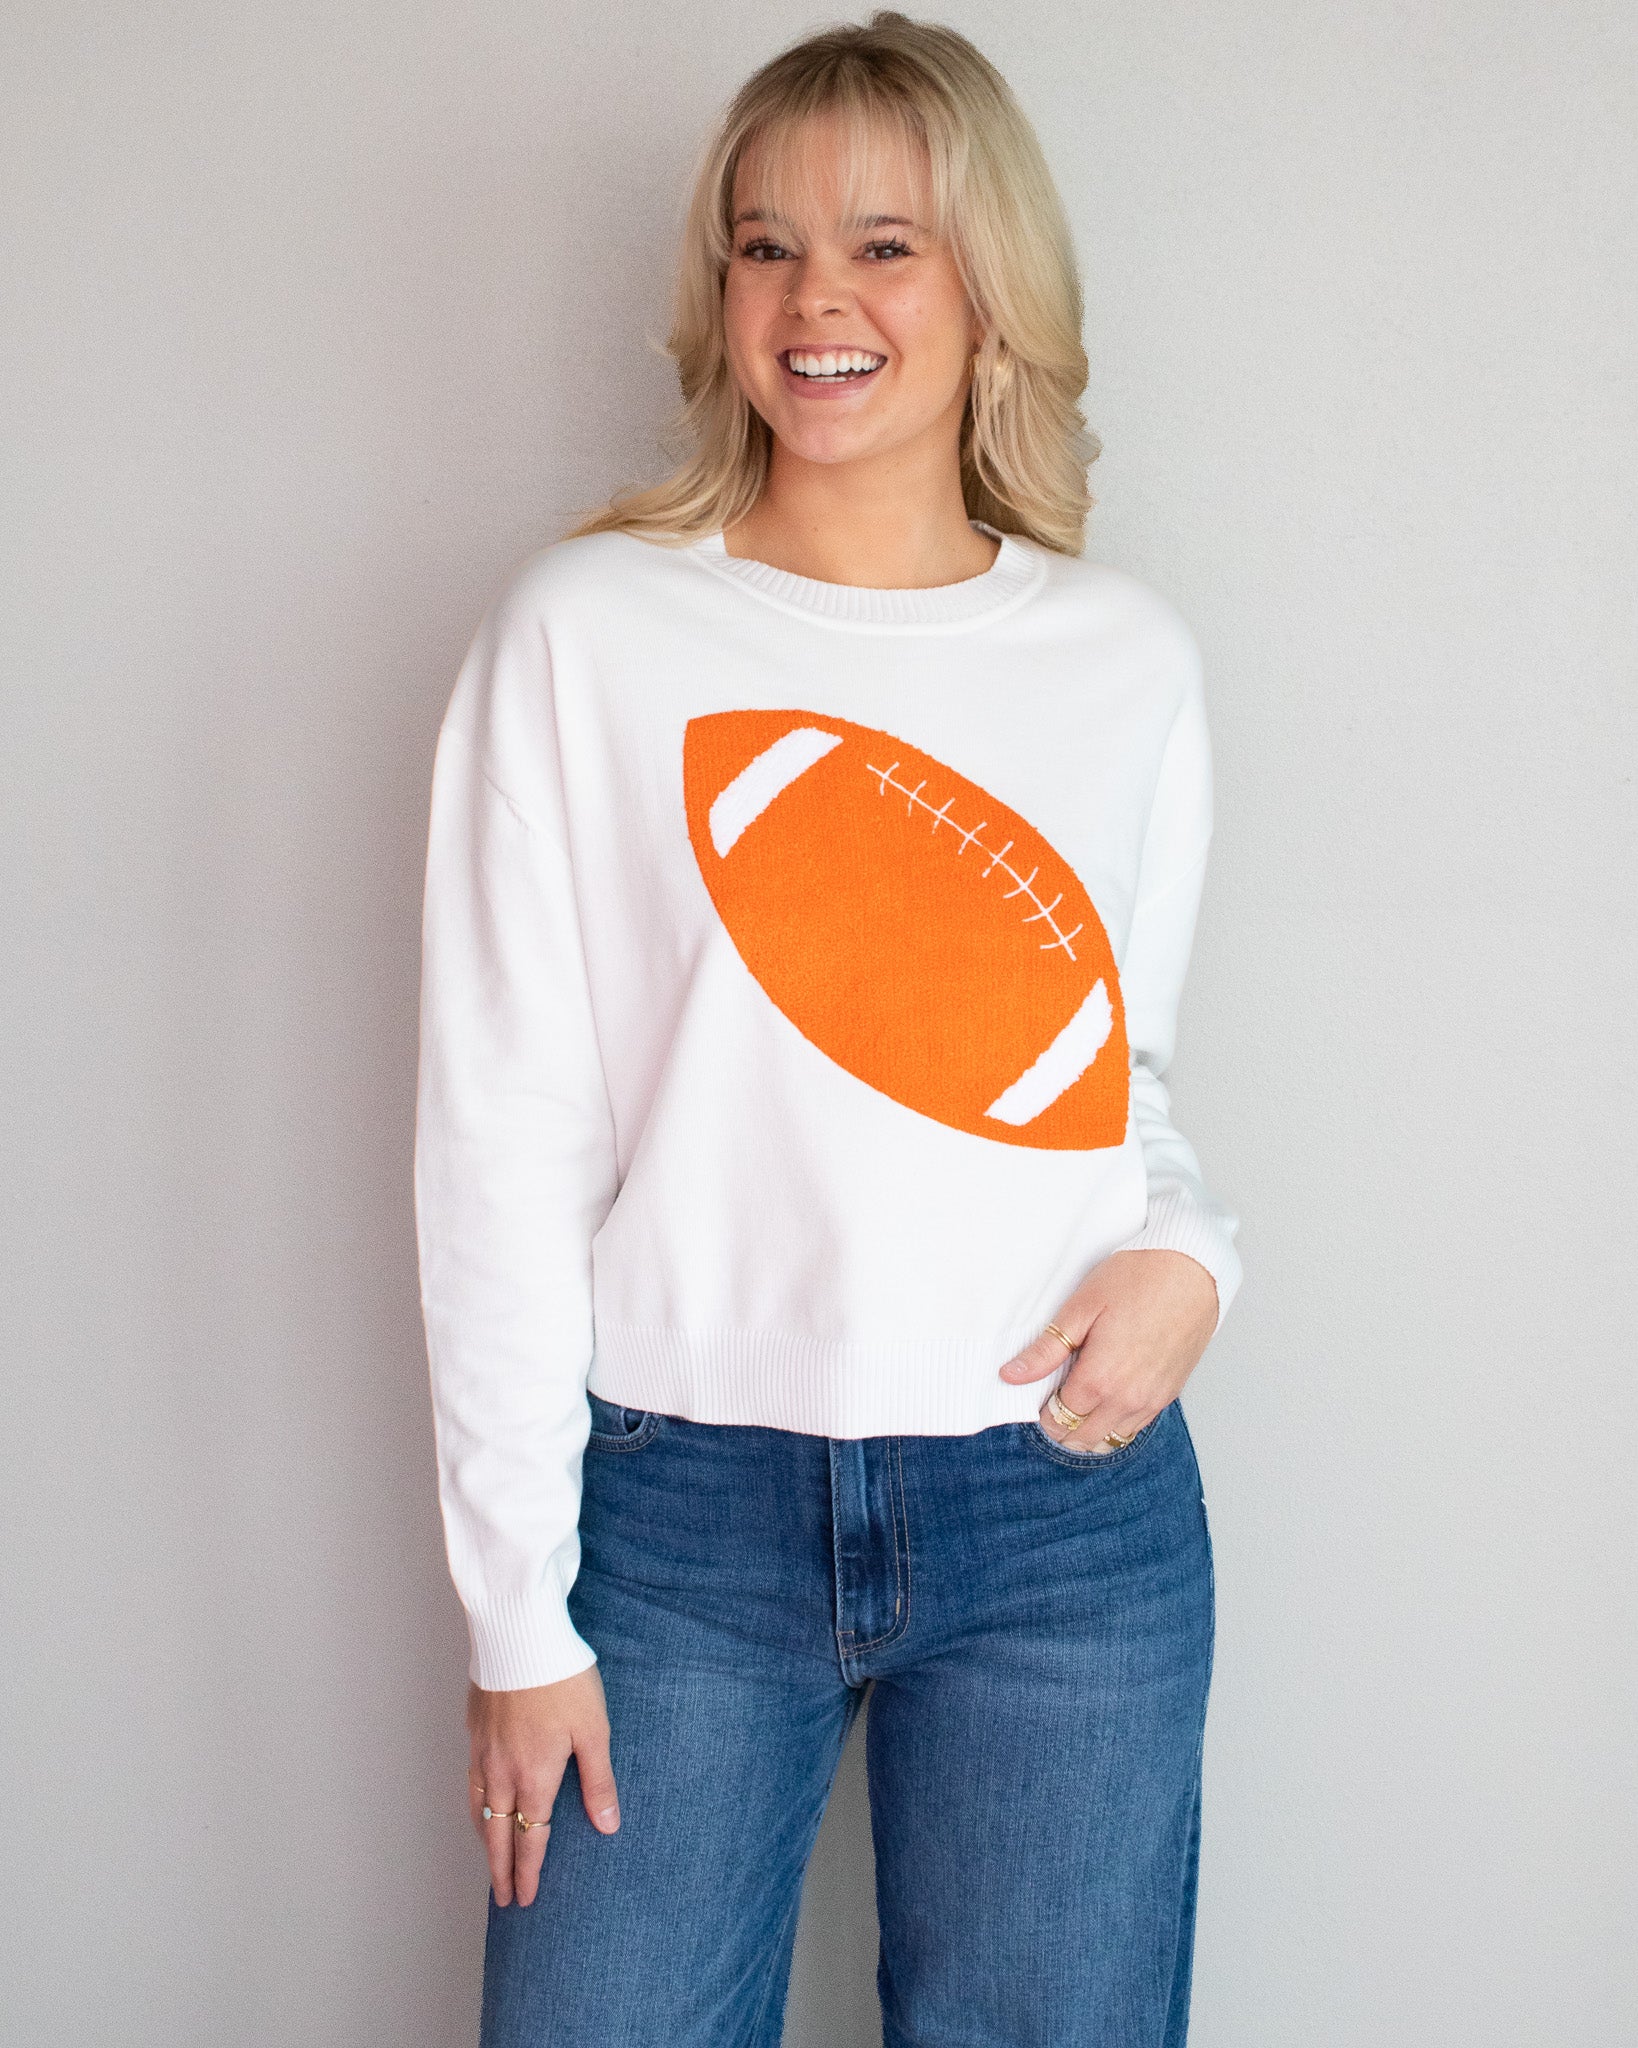 Big Orange Football Embroidered Sweater